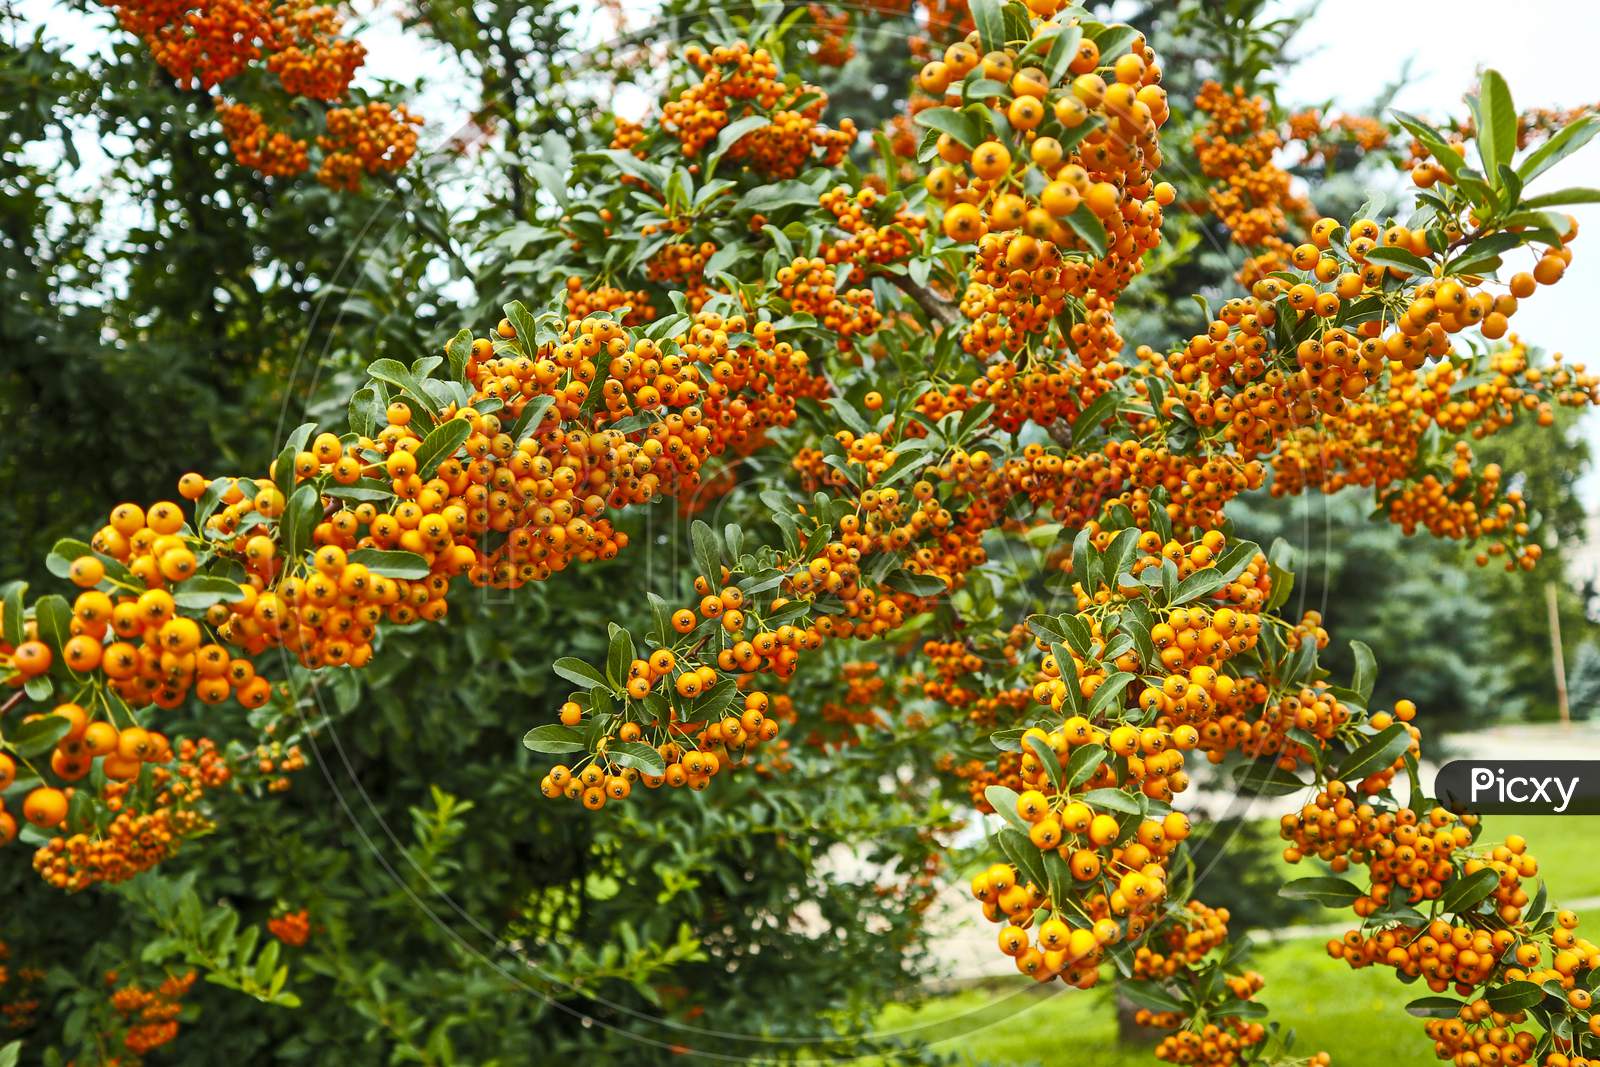 Bright Orange Sea Buckthorn Berries Close-Up.